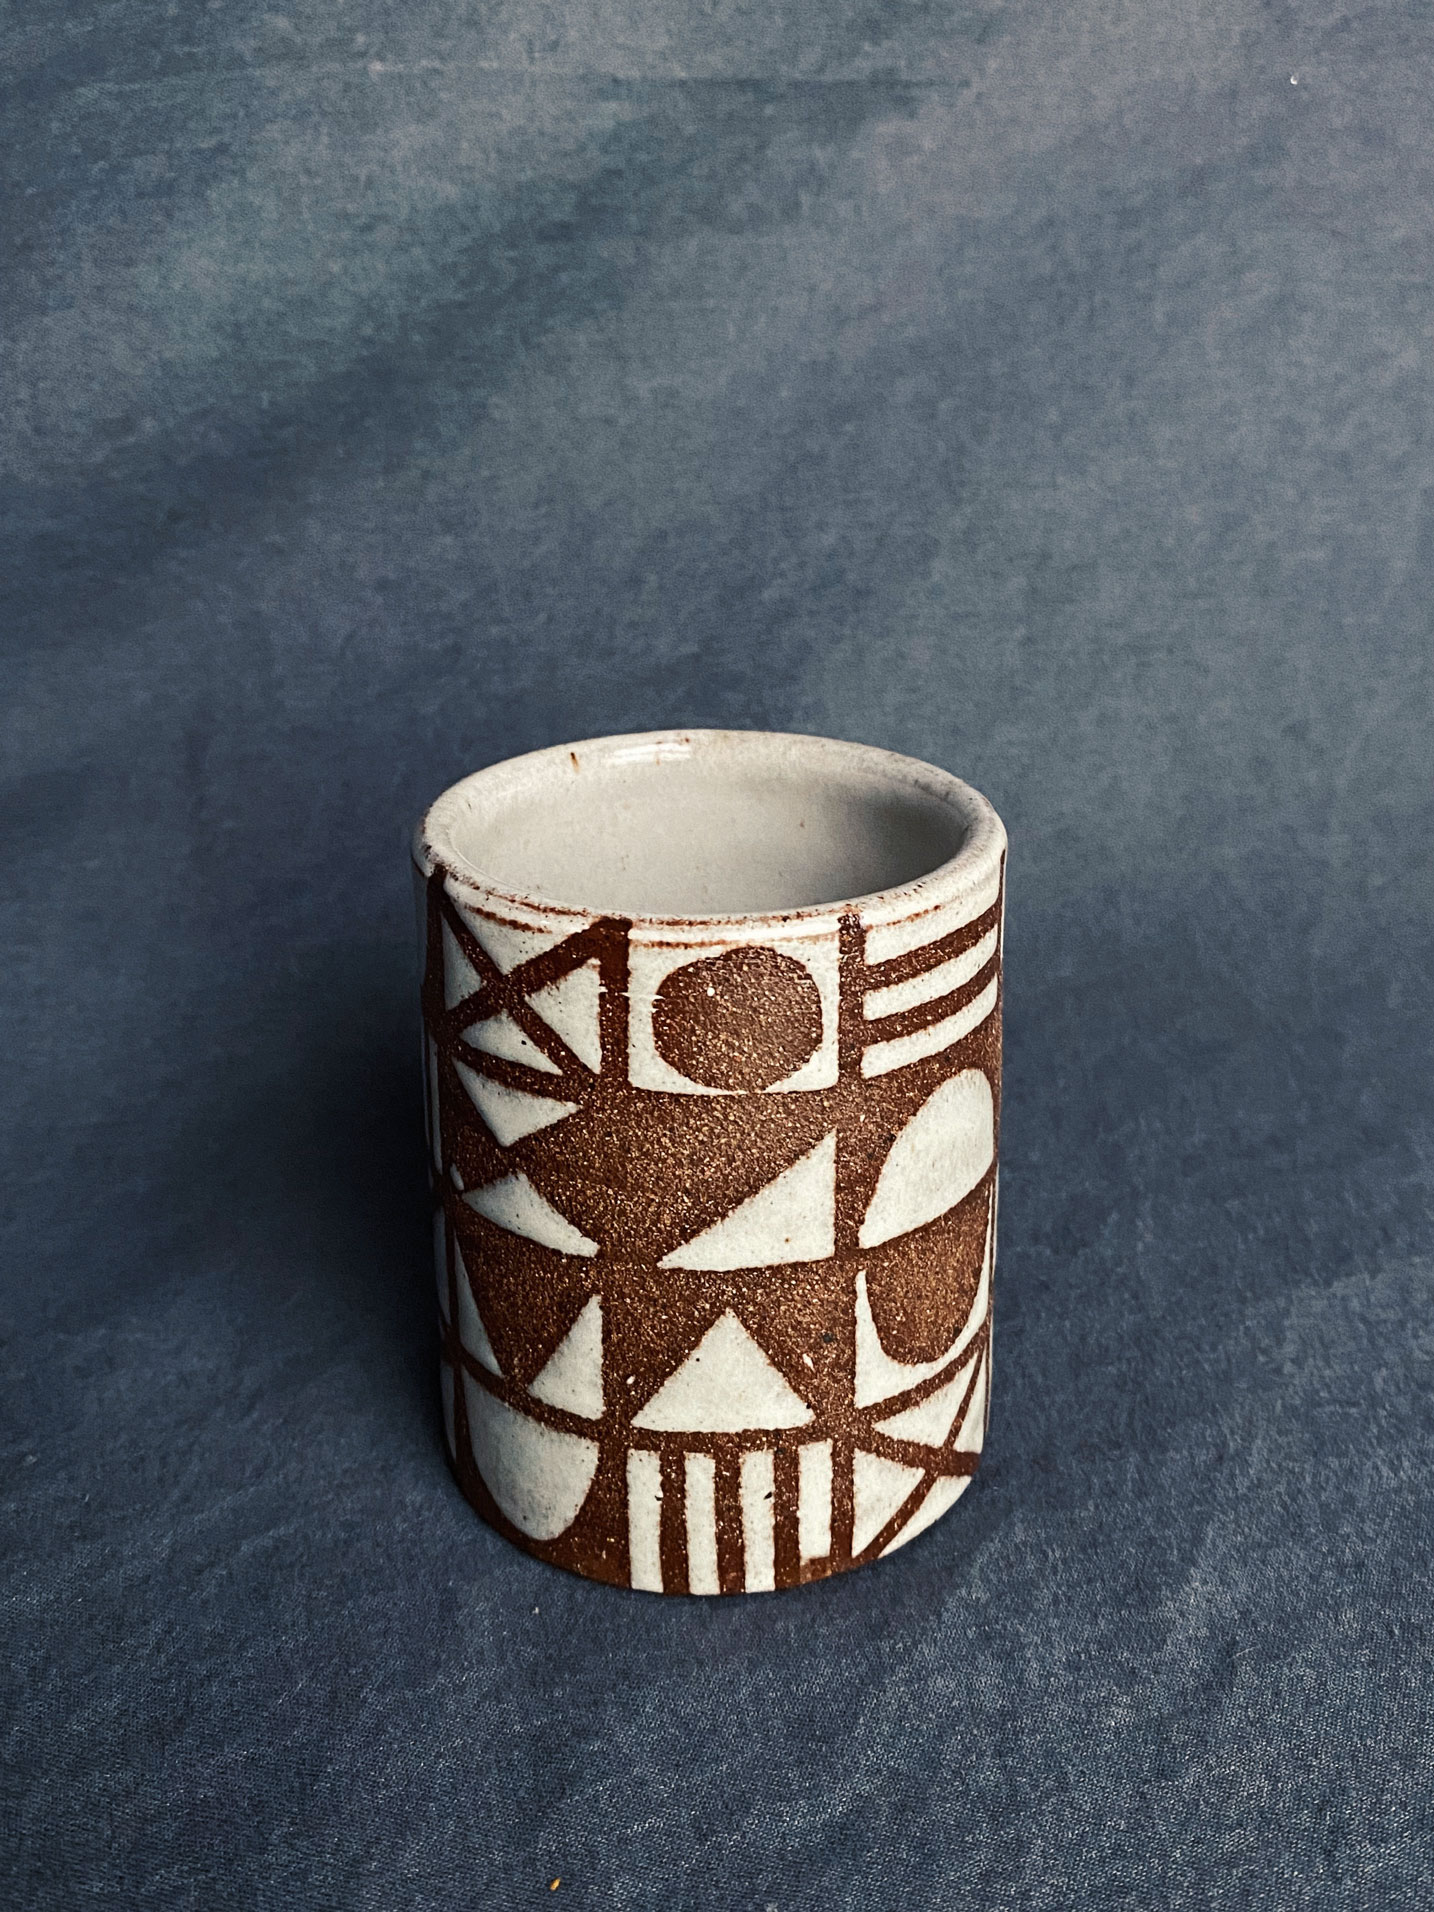 earthtone ceramic mug with pattern of geometric shapes